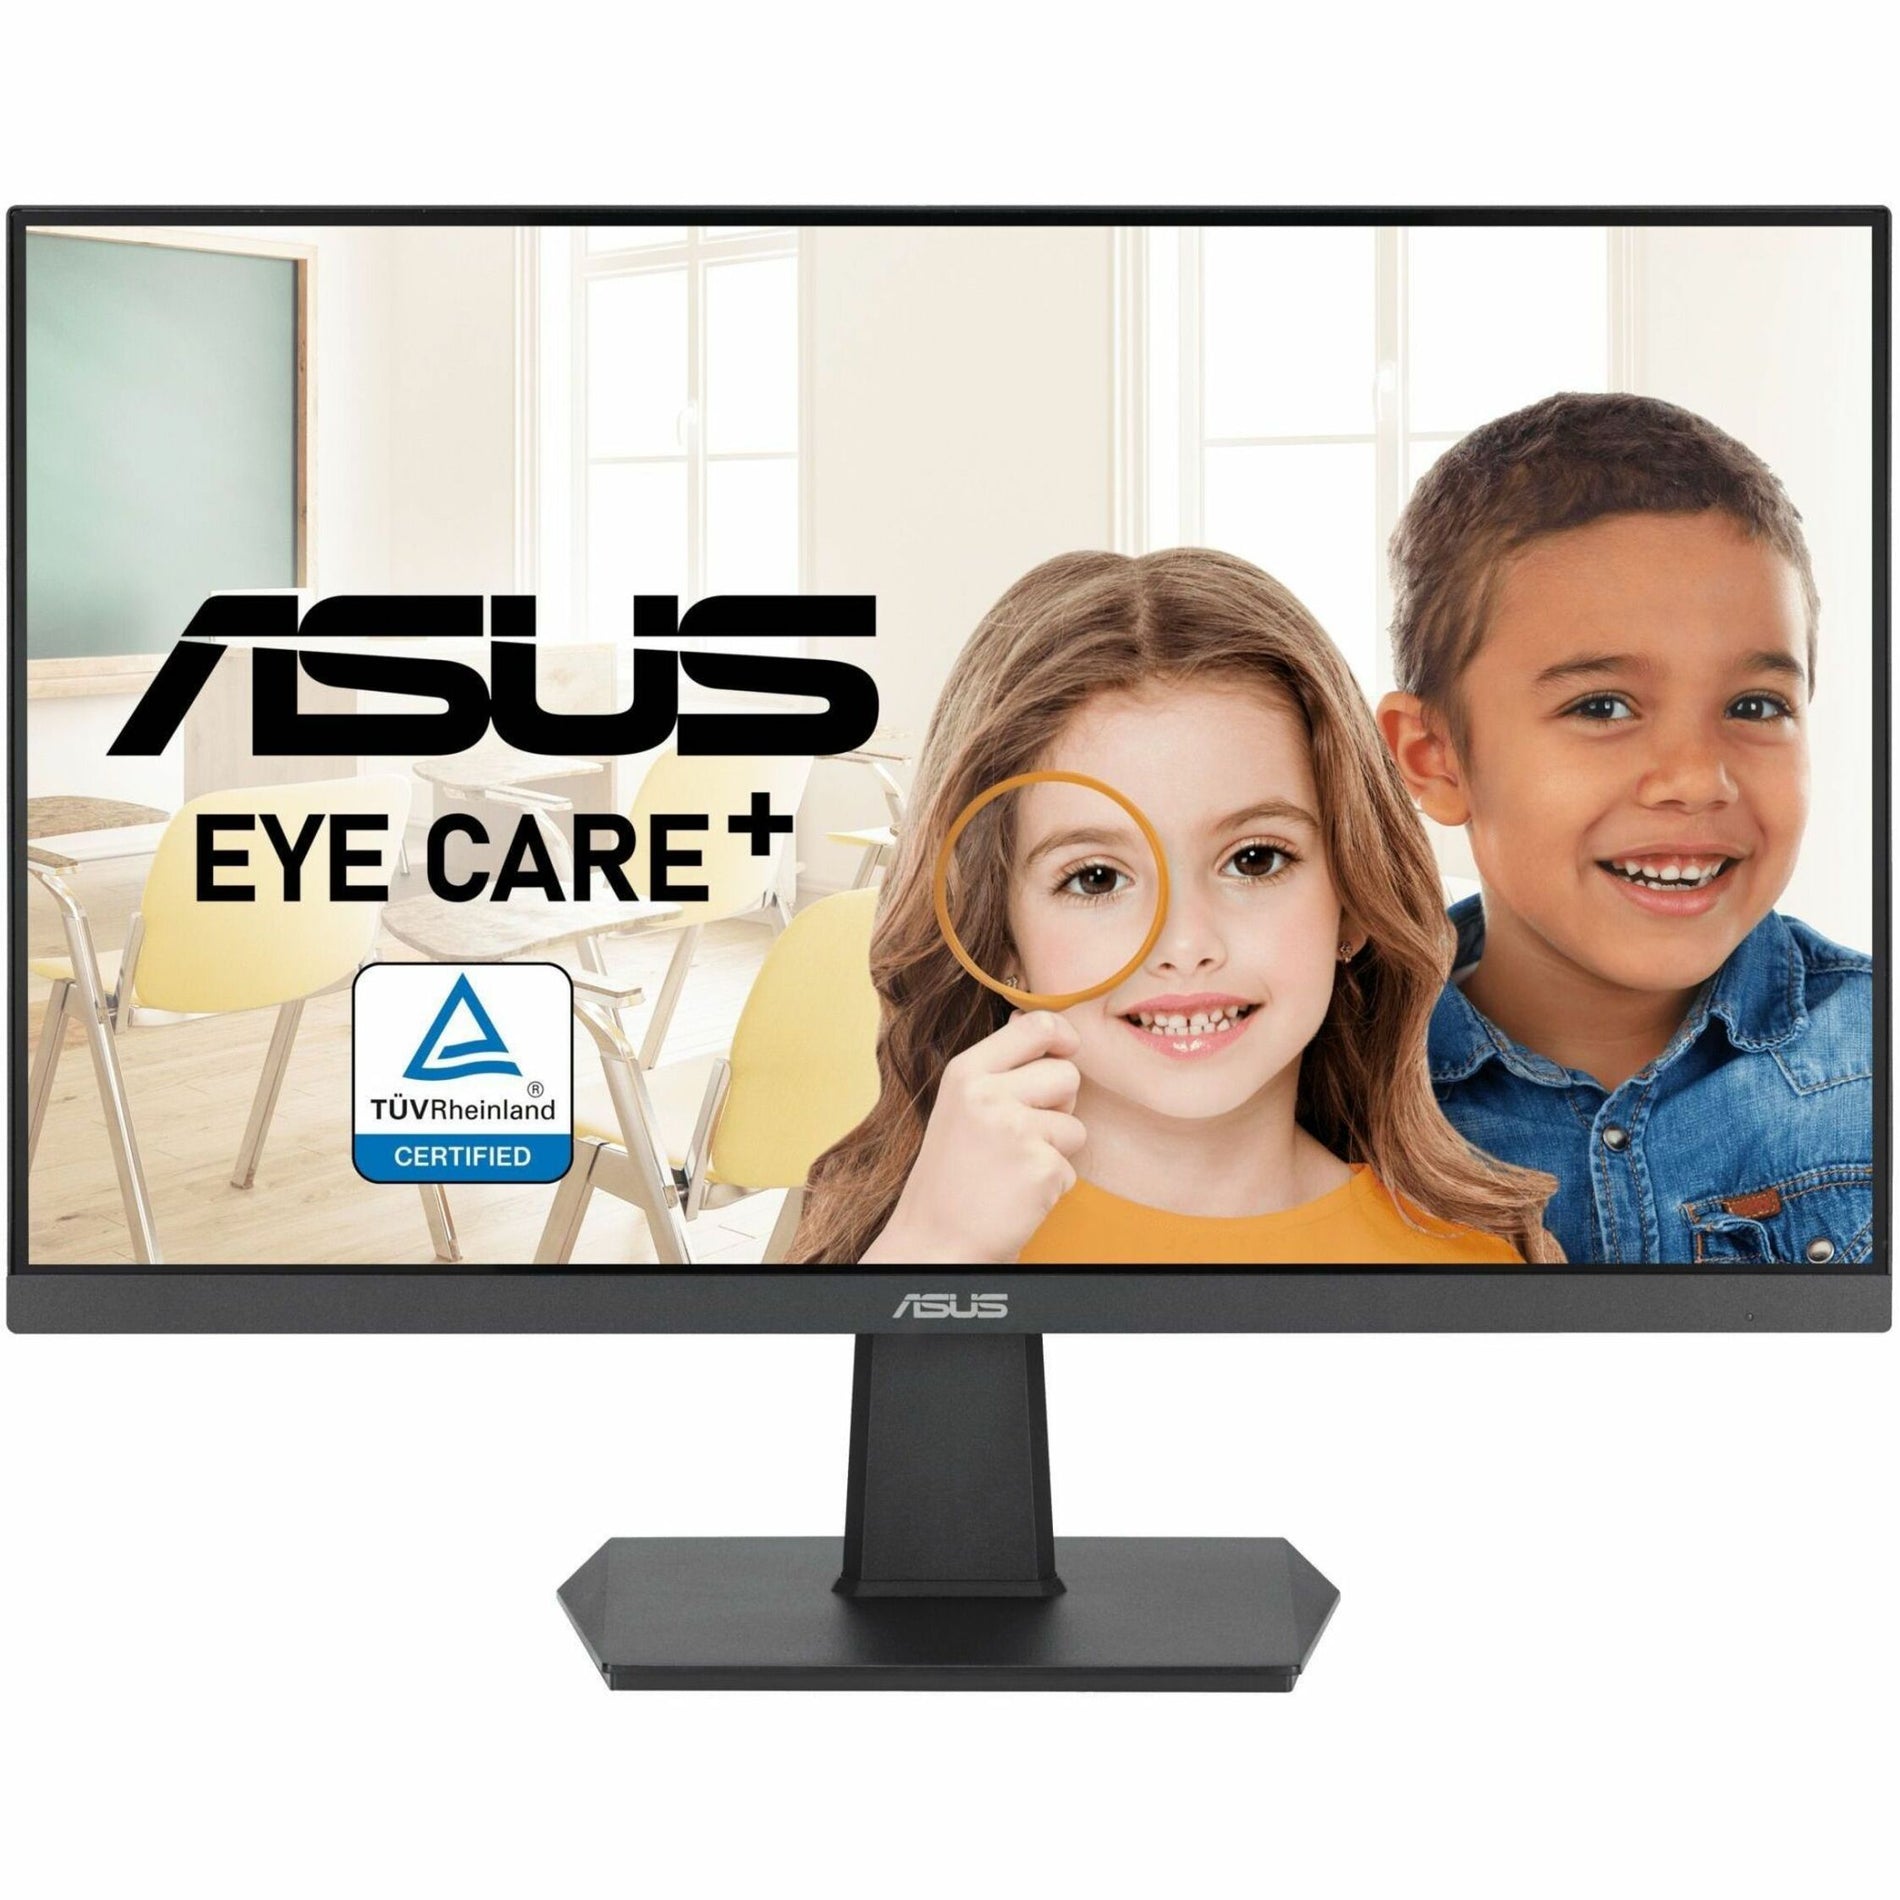 ASUS VA24EHF Widescreen Gaming LED Monitor, Full HD 23.8"